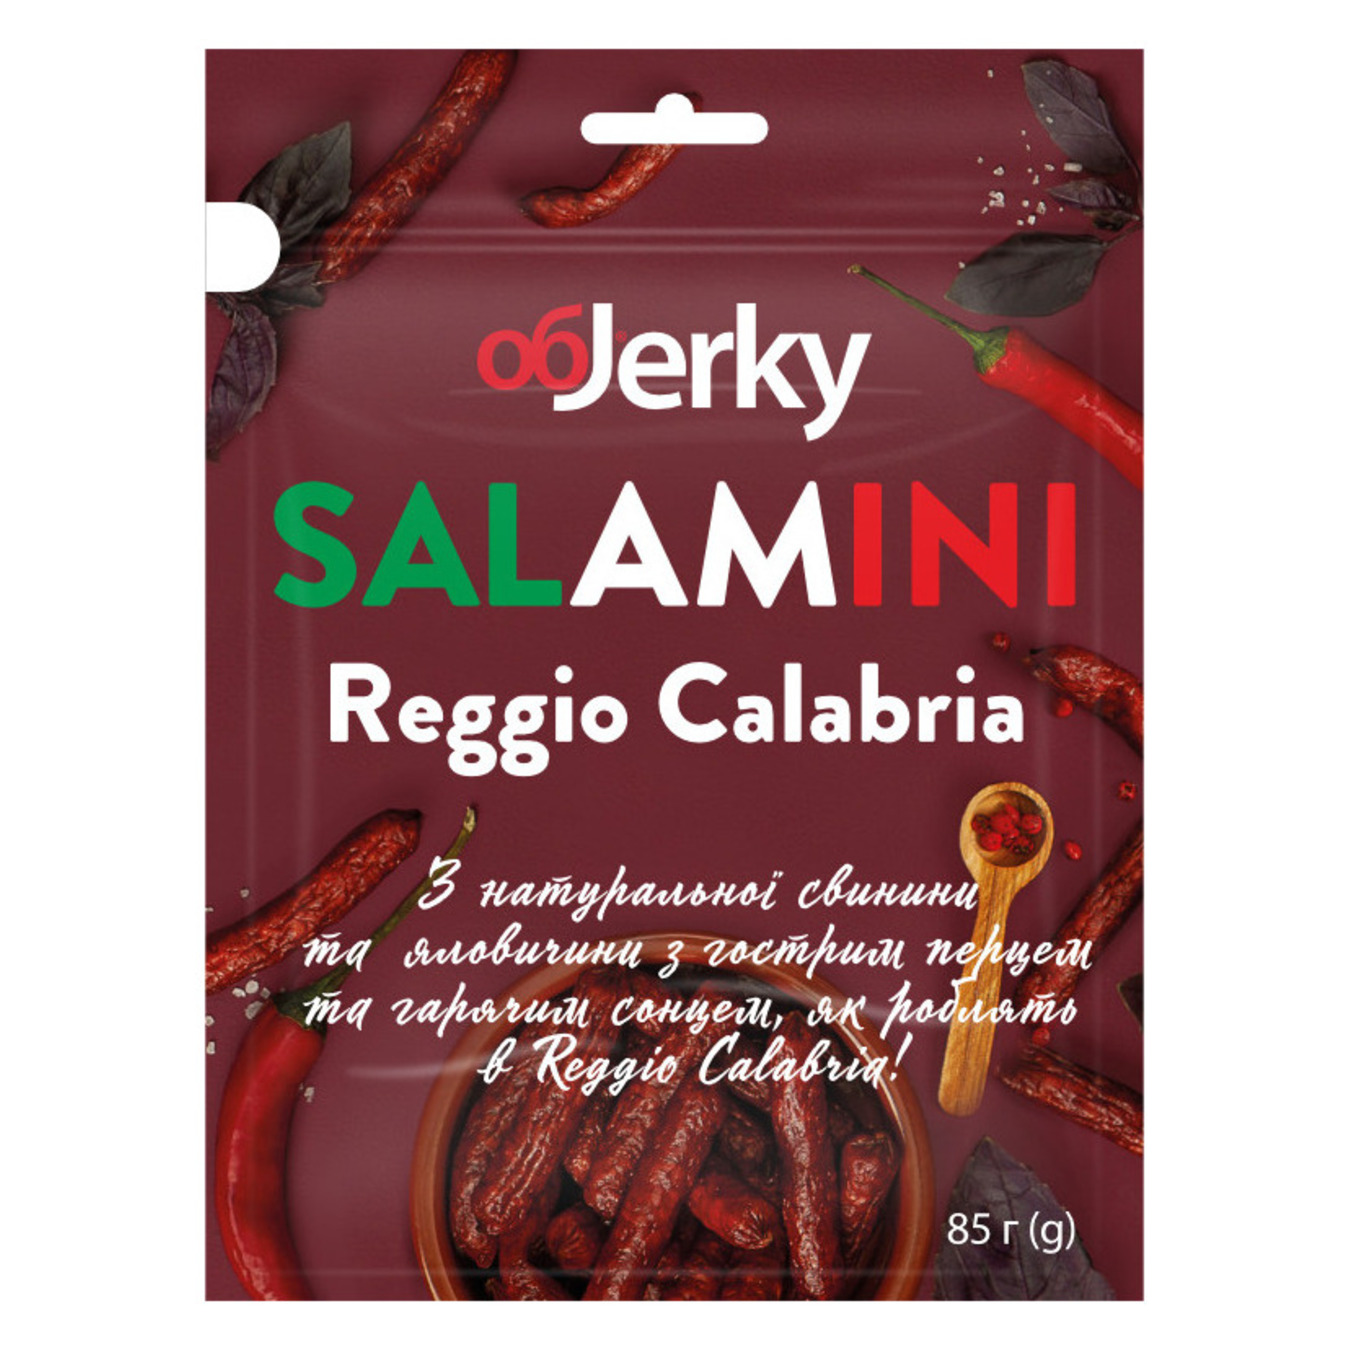 Колбаски Objerky сыровяные salamini calabria 85г